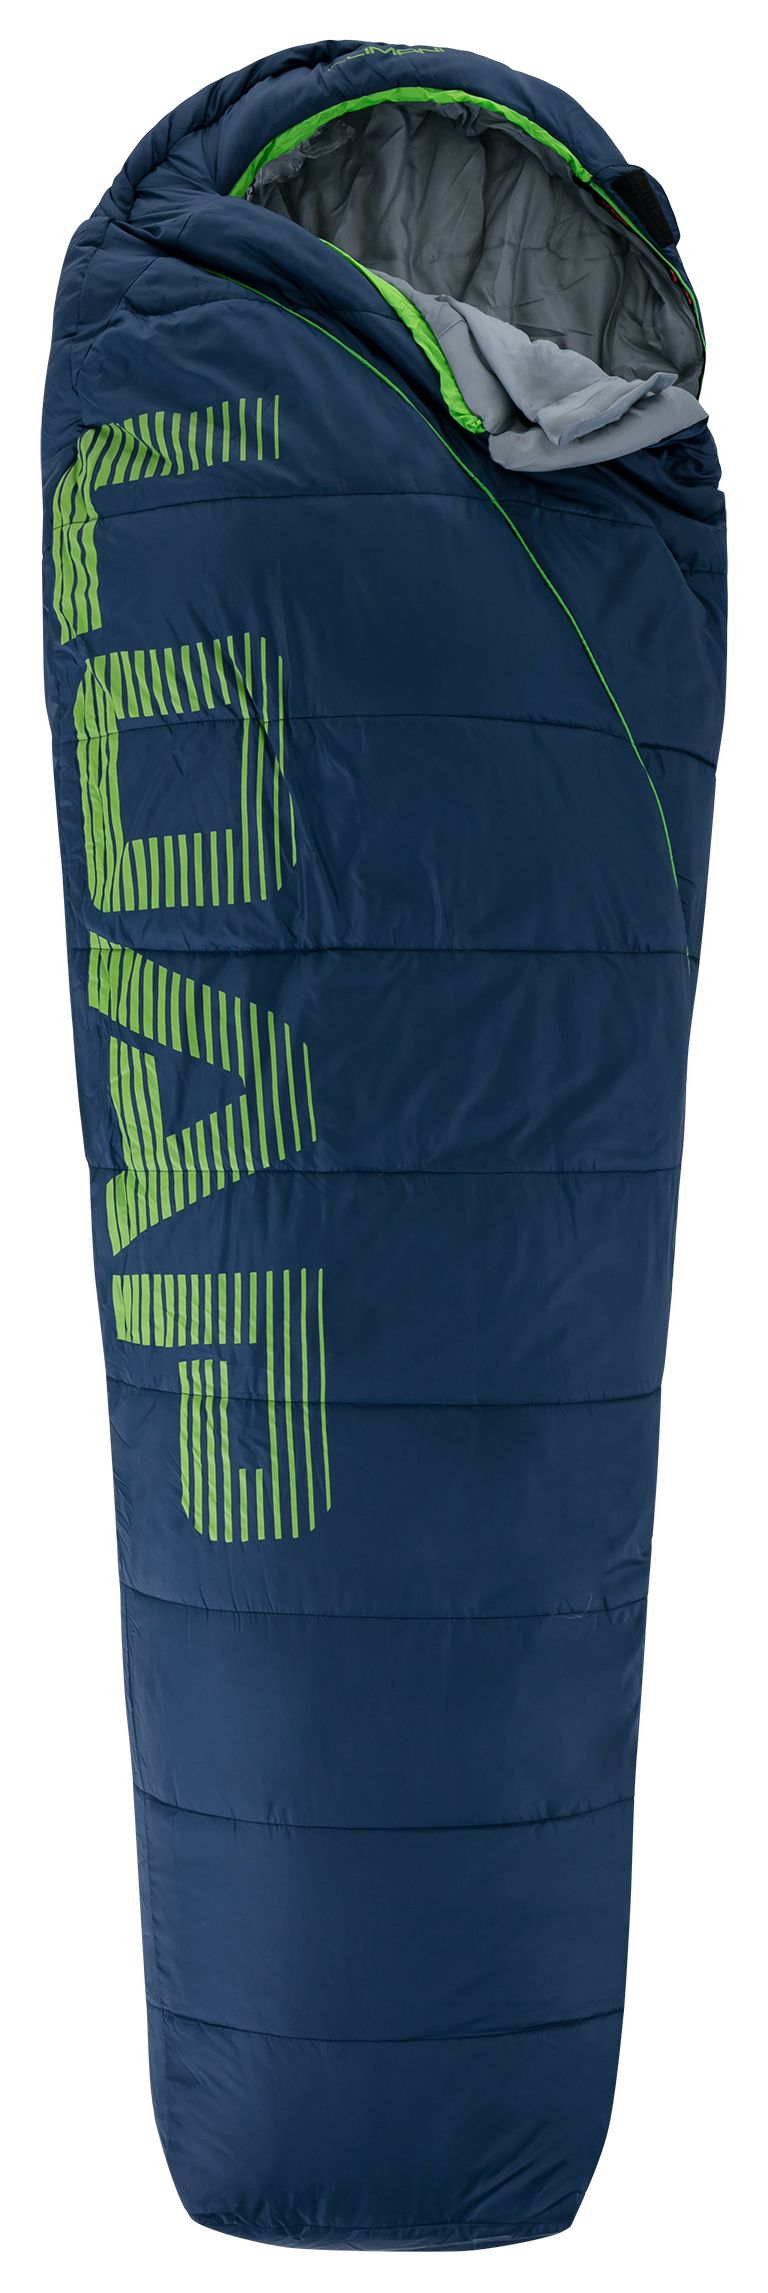 Mummy sleeping bag LOAP ILLIMANI Blue/Green